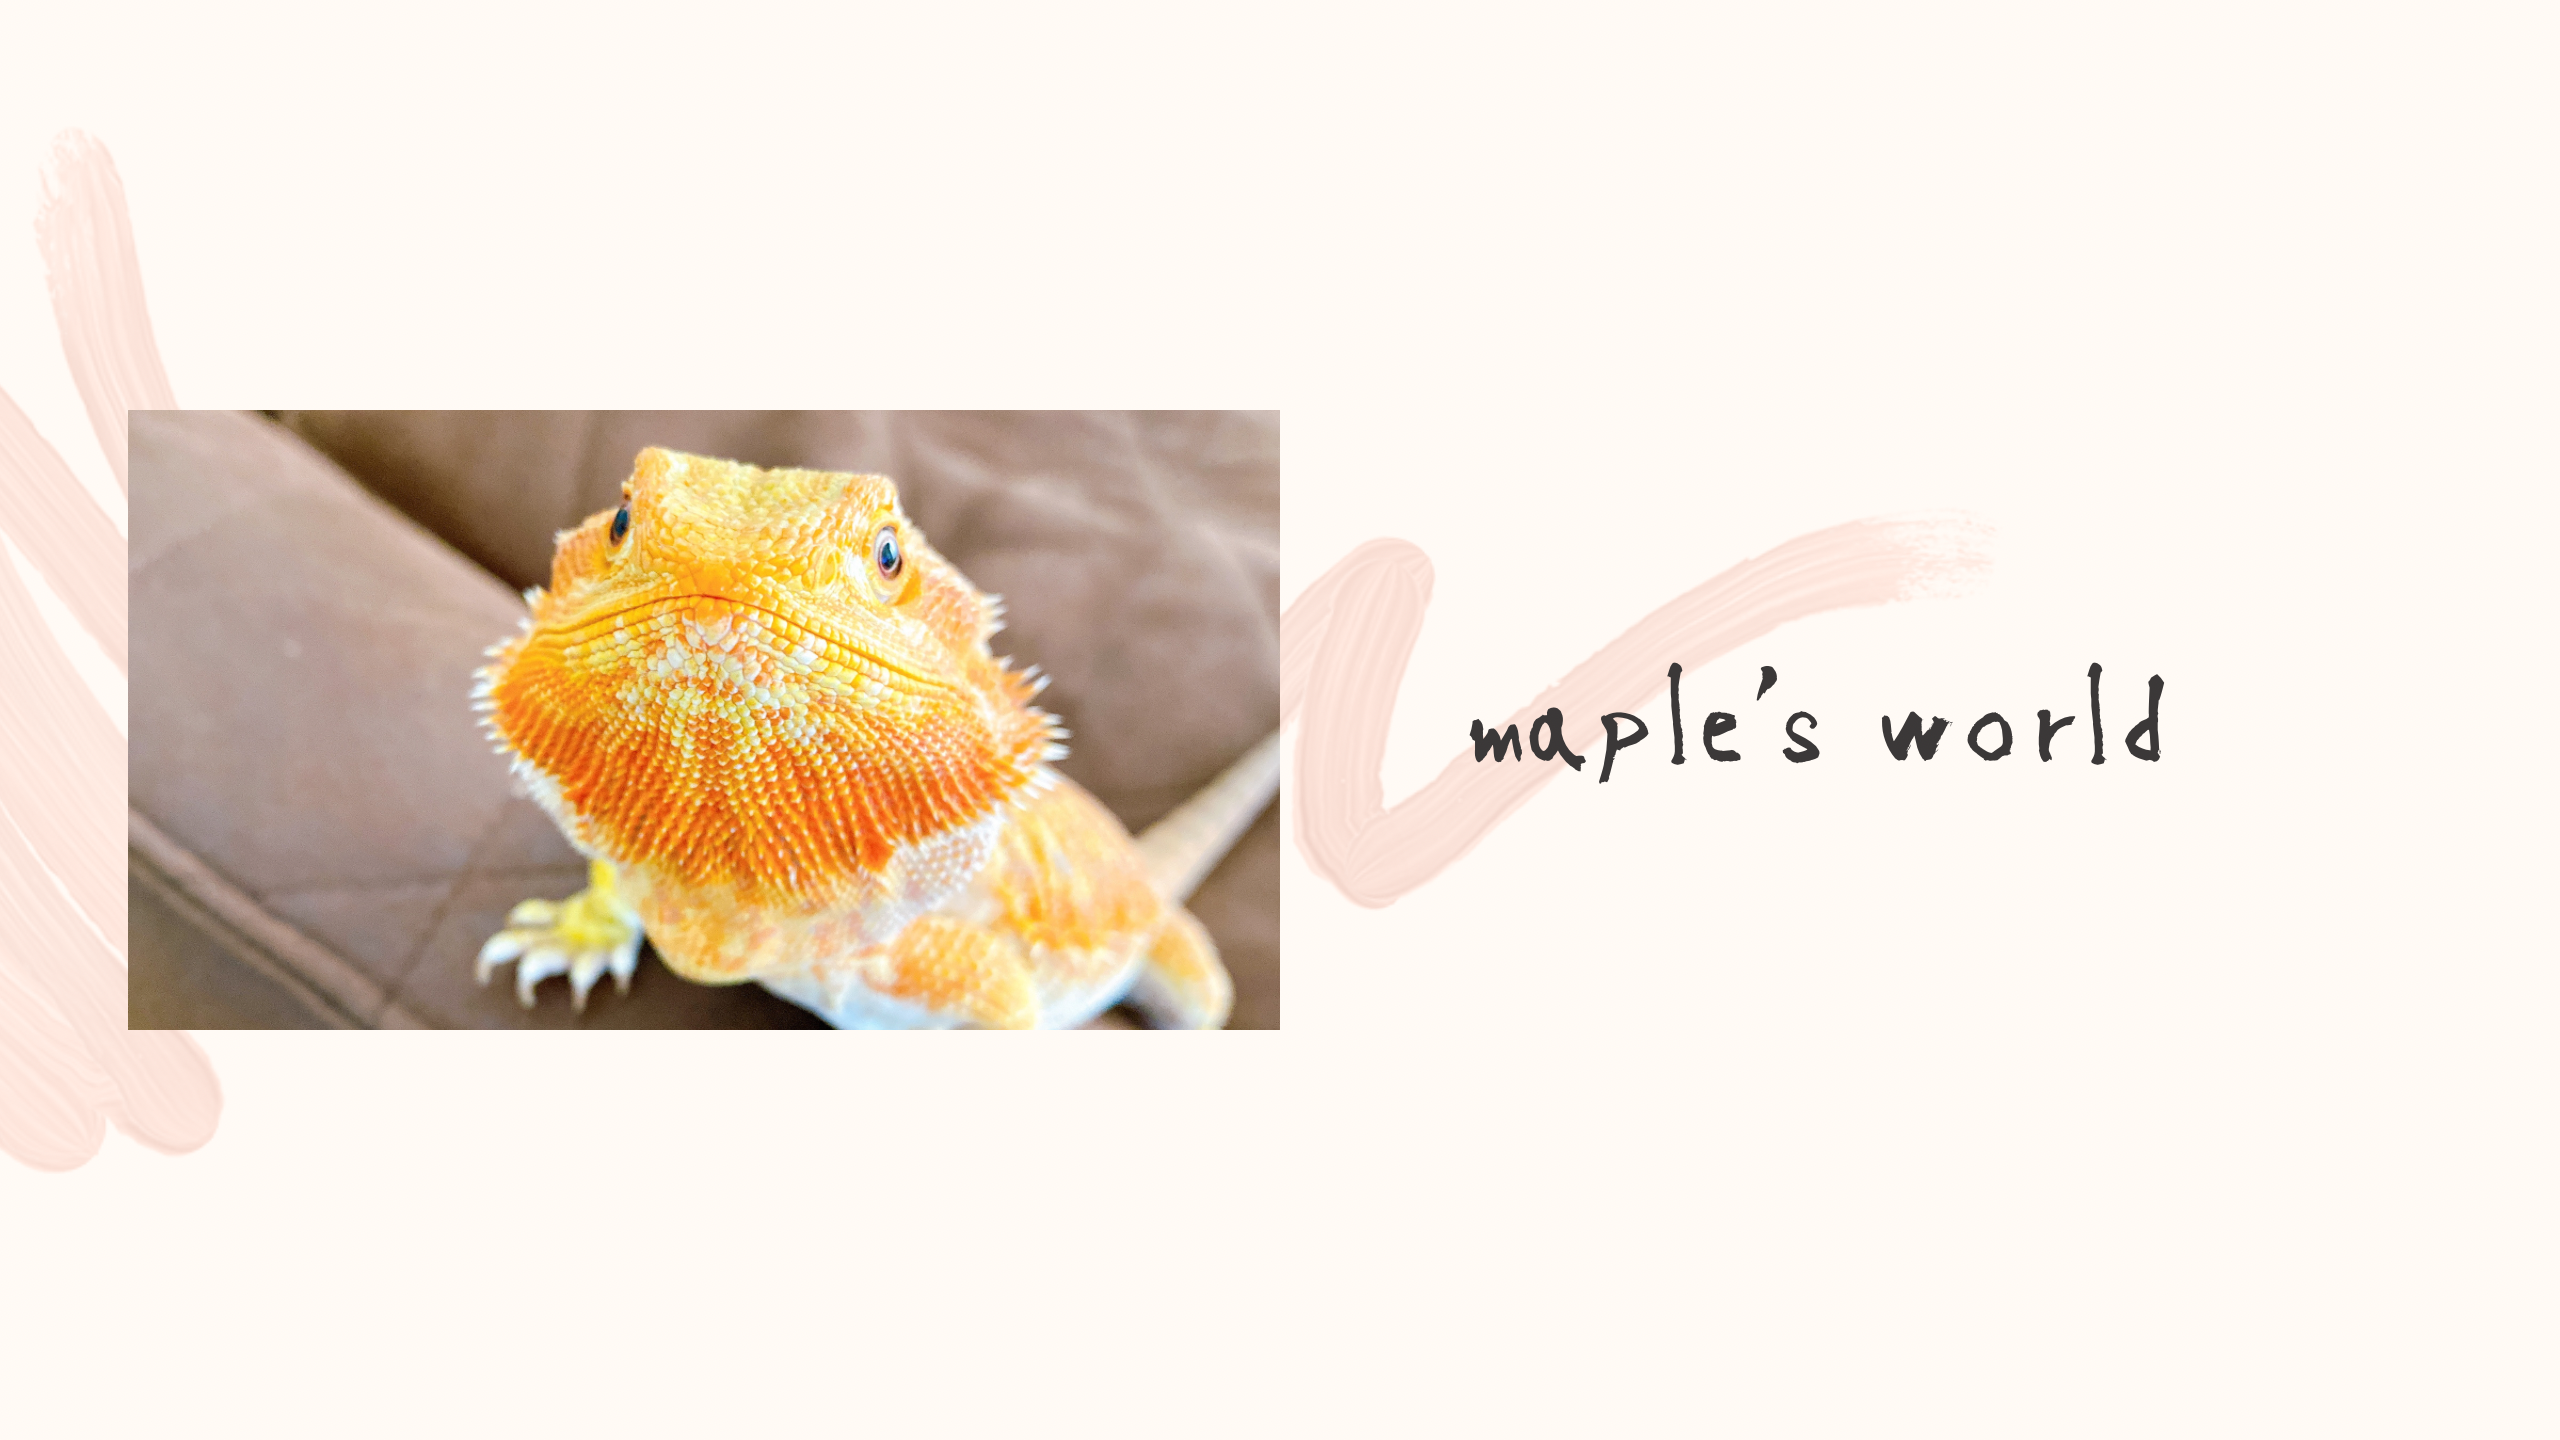 『Maple's world』